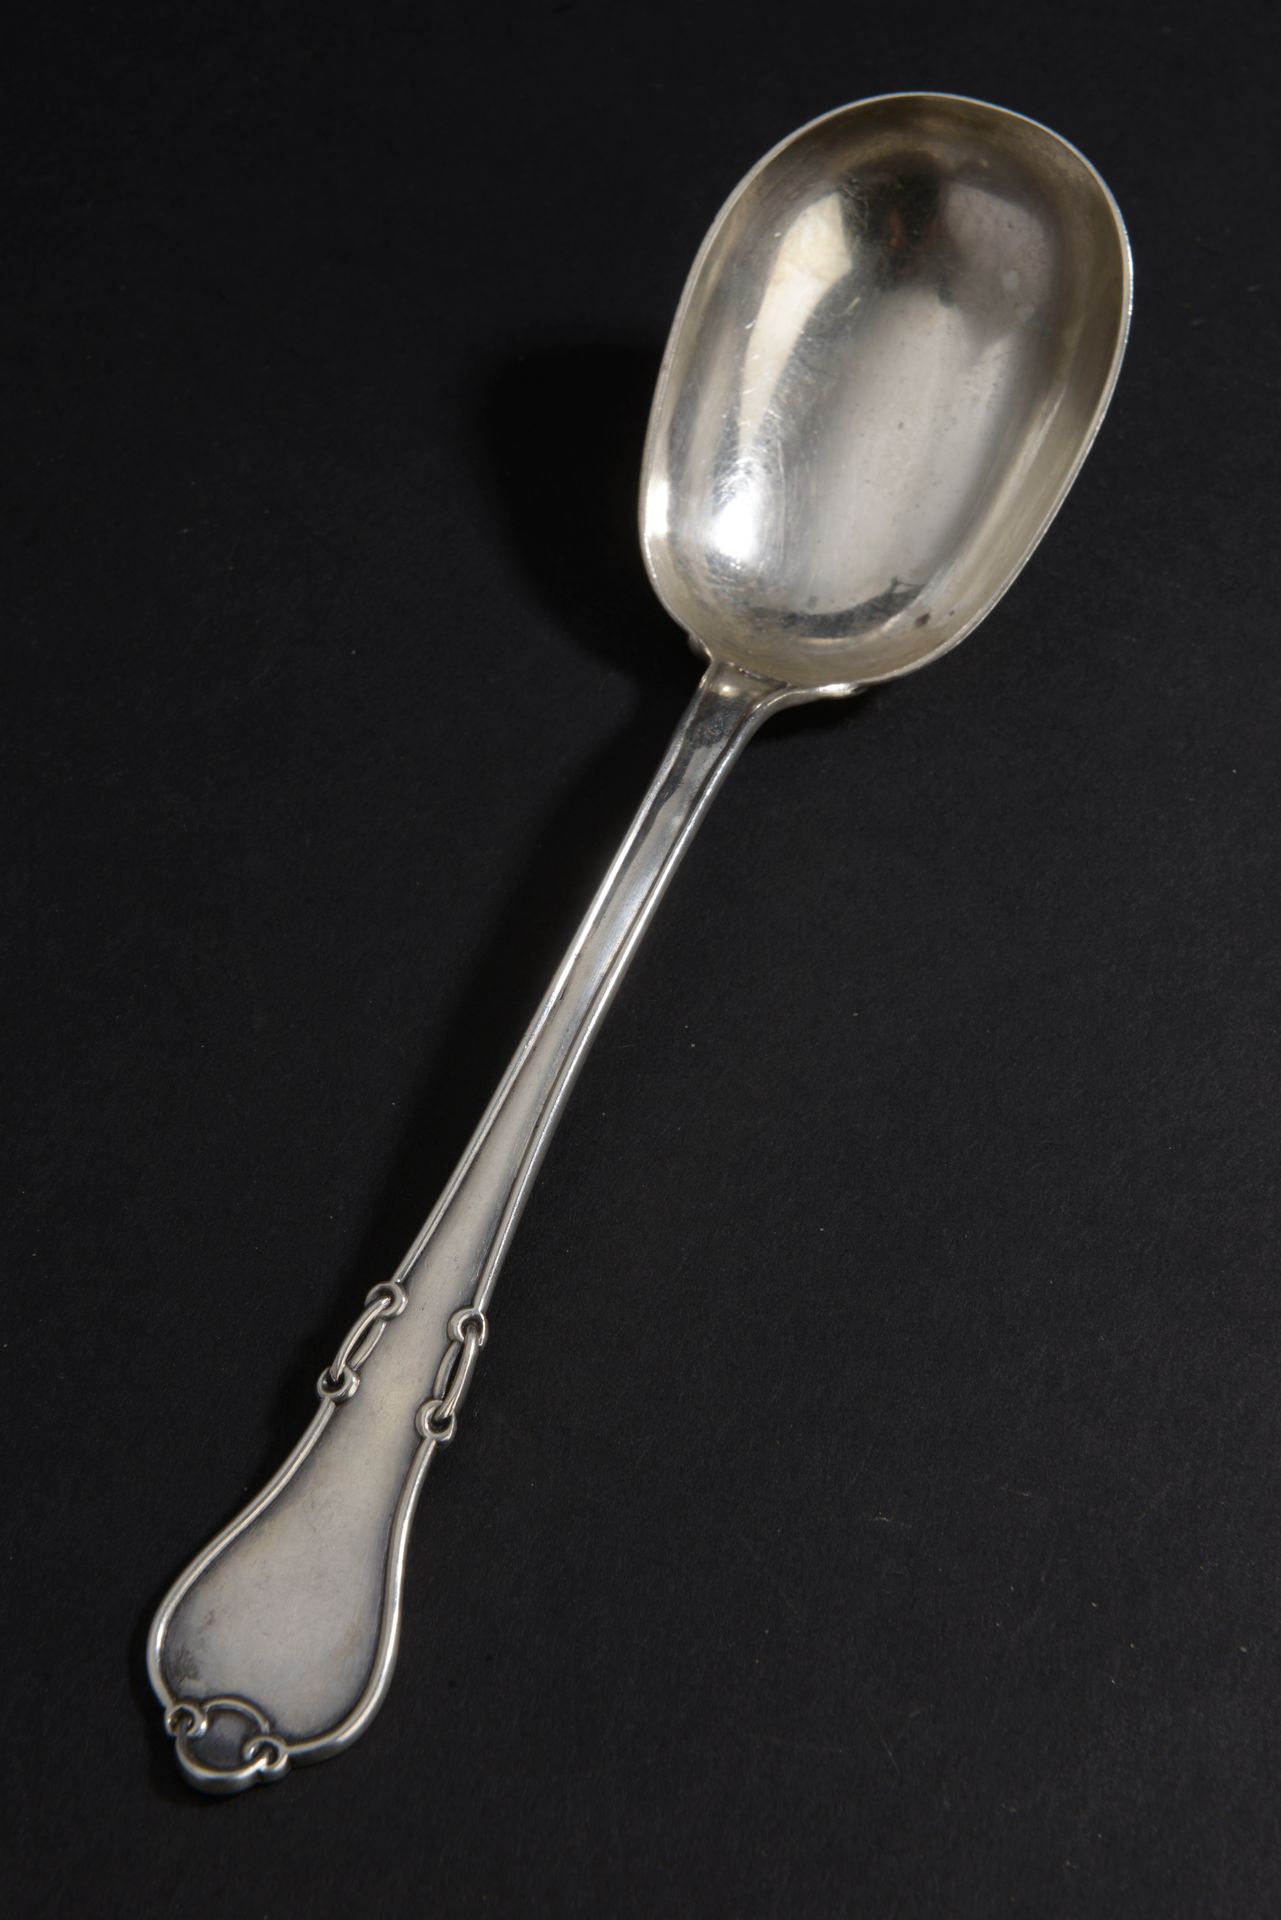 Null 银质奶油勺子，带环形装饰。

标识：Minerve - 重量：63.6克